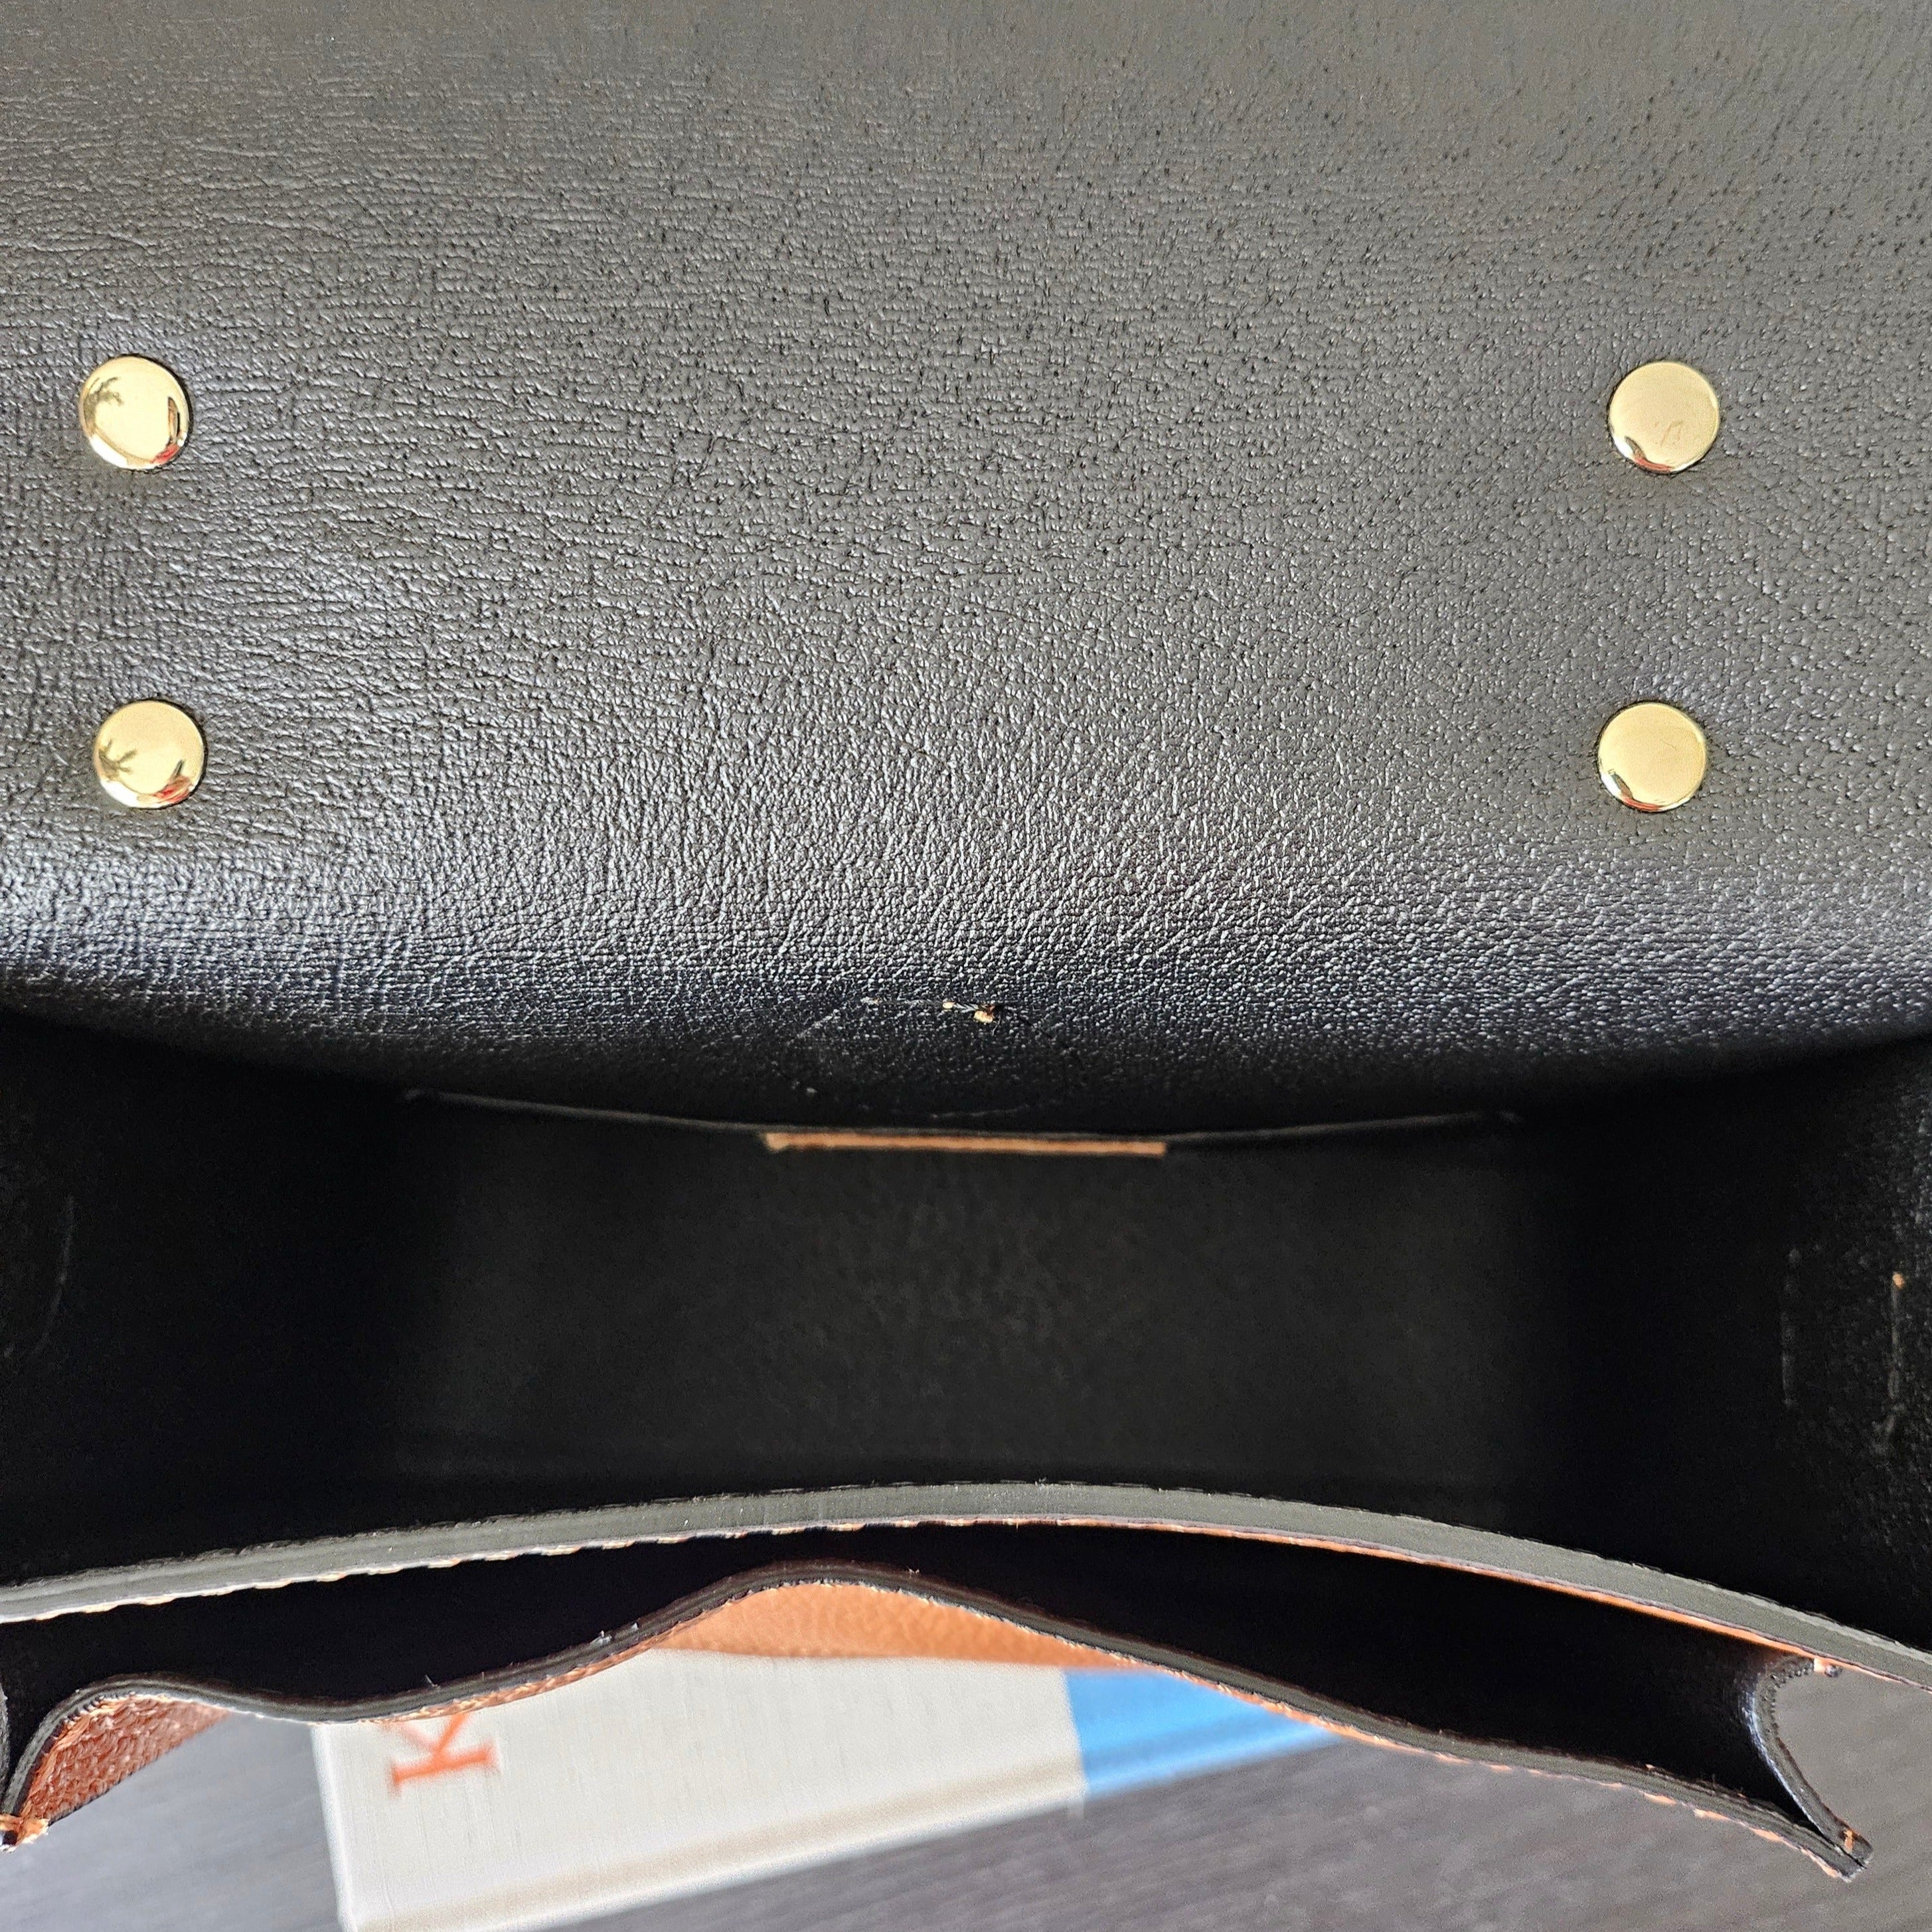 Iminglobal 4 in 1 Satchel Convertible Italian leather backpack tote crossbody bag